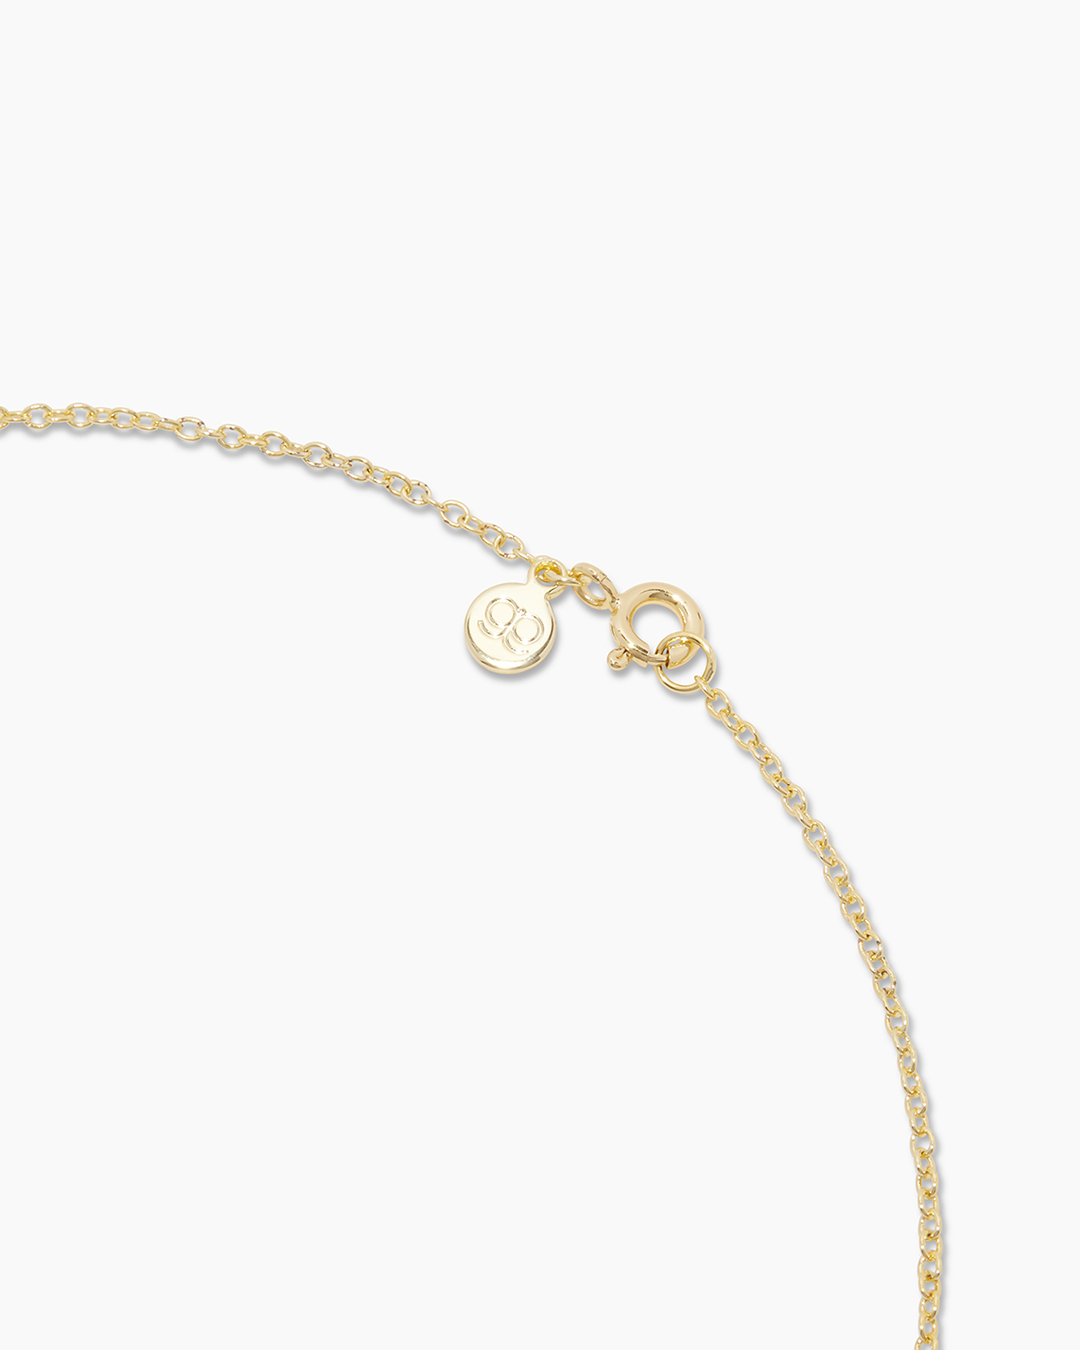 Gold | Gorjana Jewelry Gold engravable necklace, nameplate necklace, name necklace, thoughtful jewelry gift, bridal jewelry, bridesmaid necklace, gift for bridesmaids